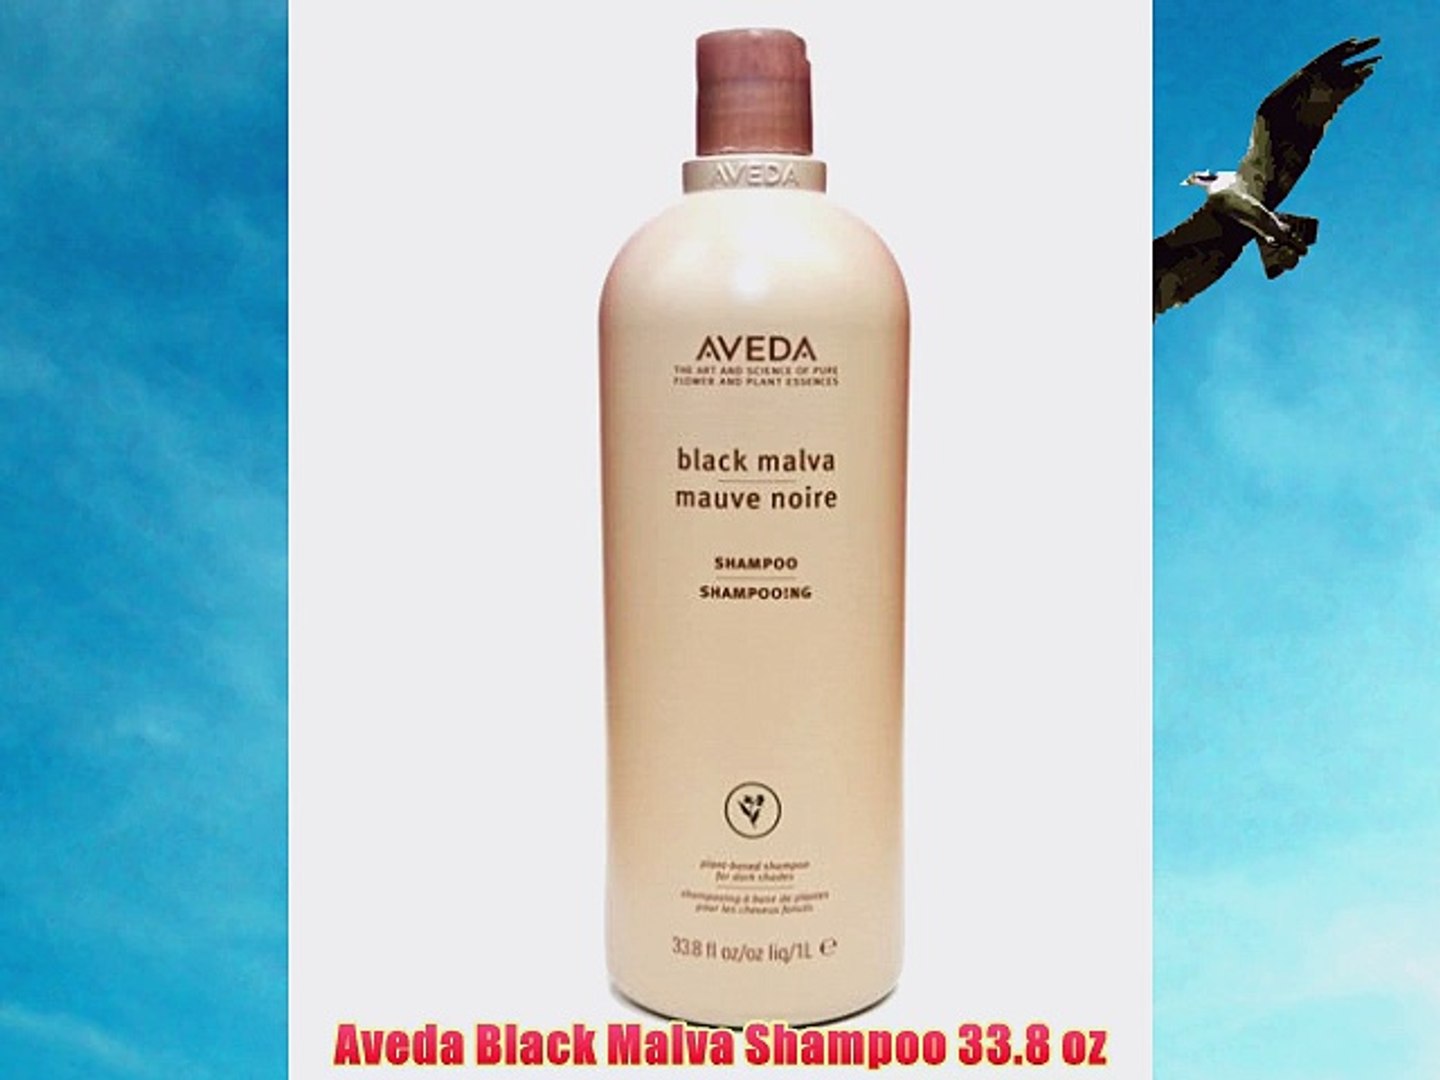 Aveda Black Malva Shampoo 33.8 oz - video Dailymotion